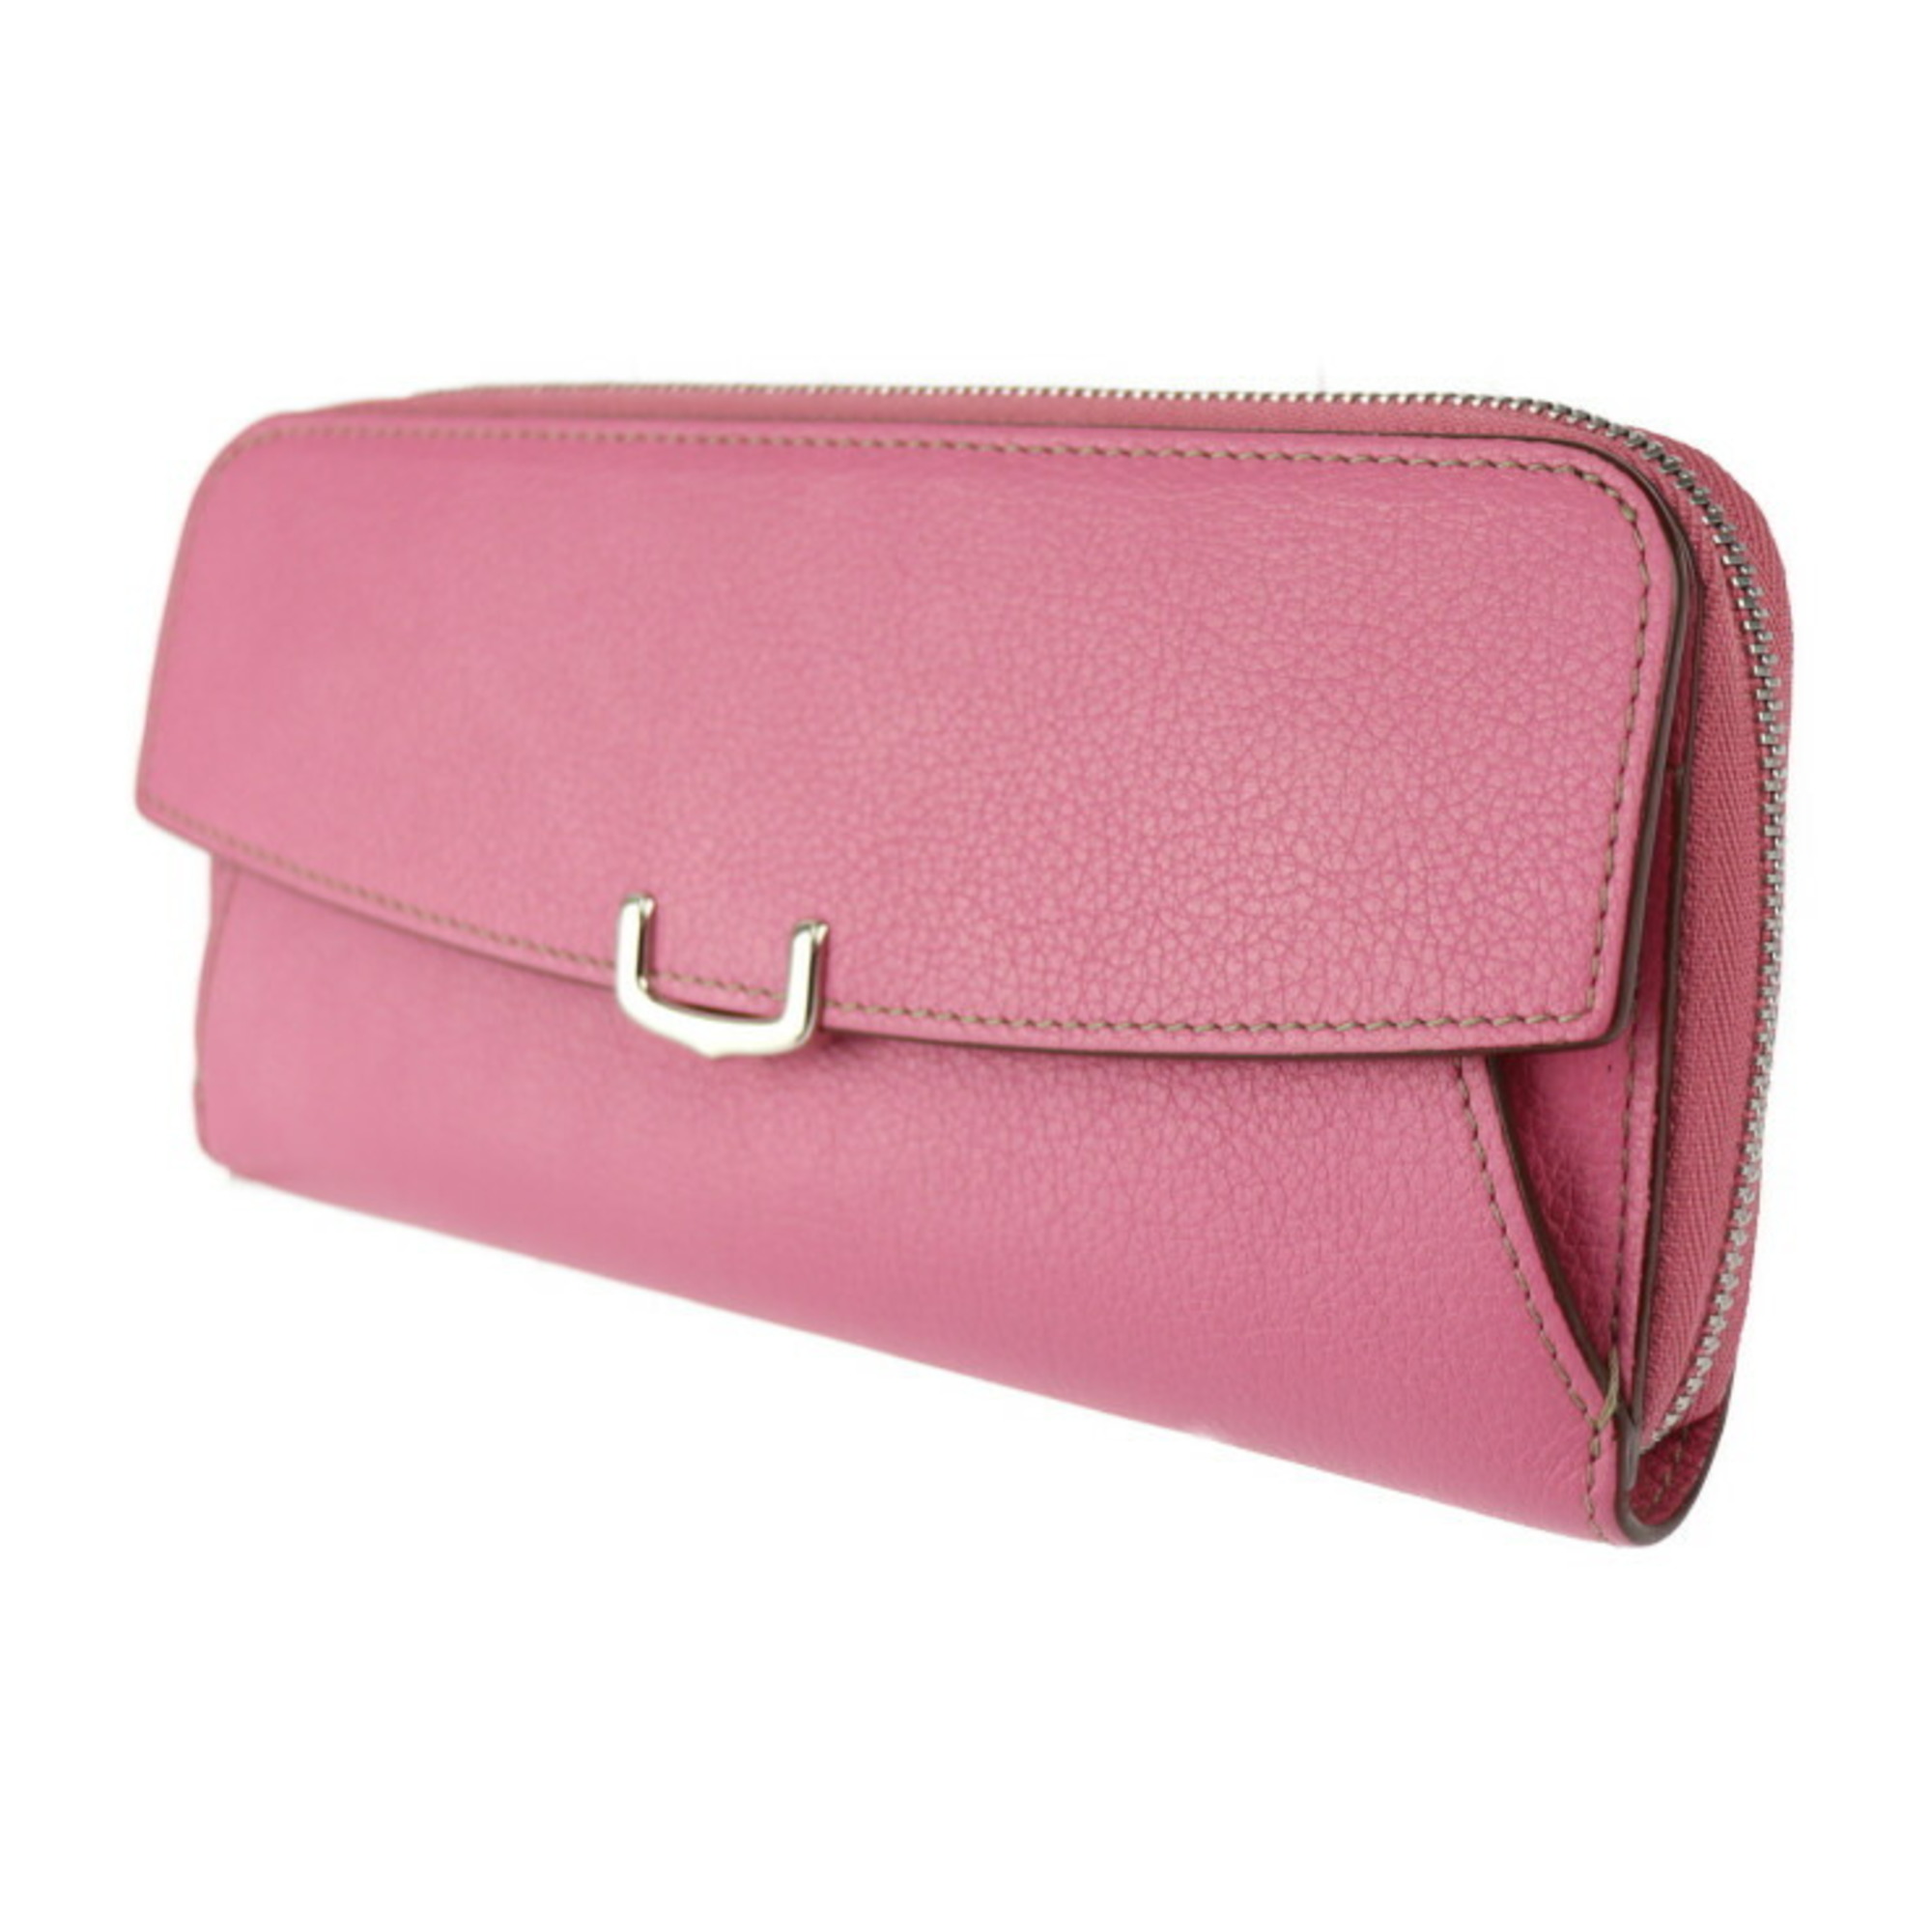 CARTIER C de Cartier long wallet L3001619 leather pink silver hardware round zipper